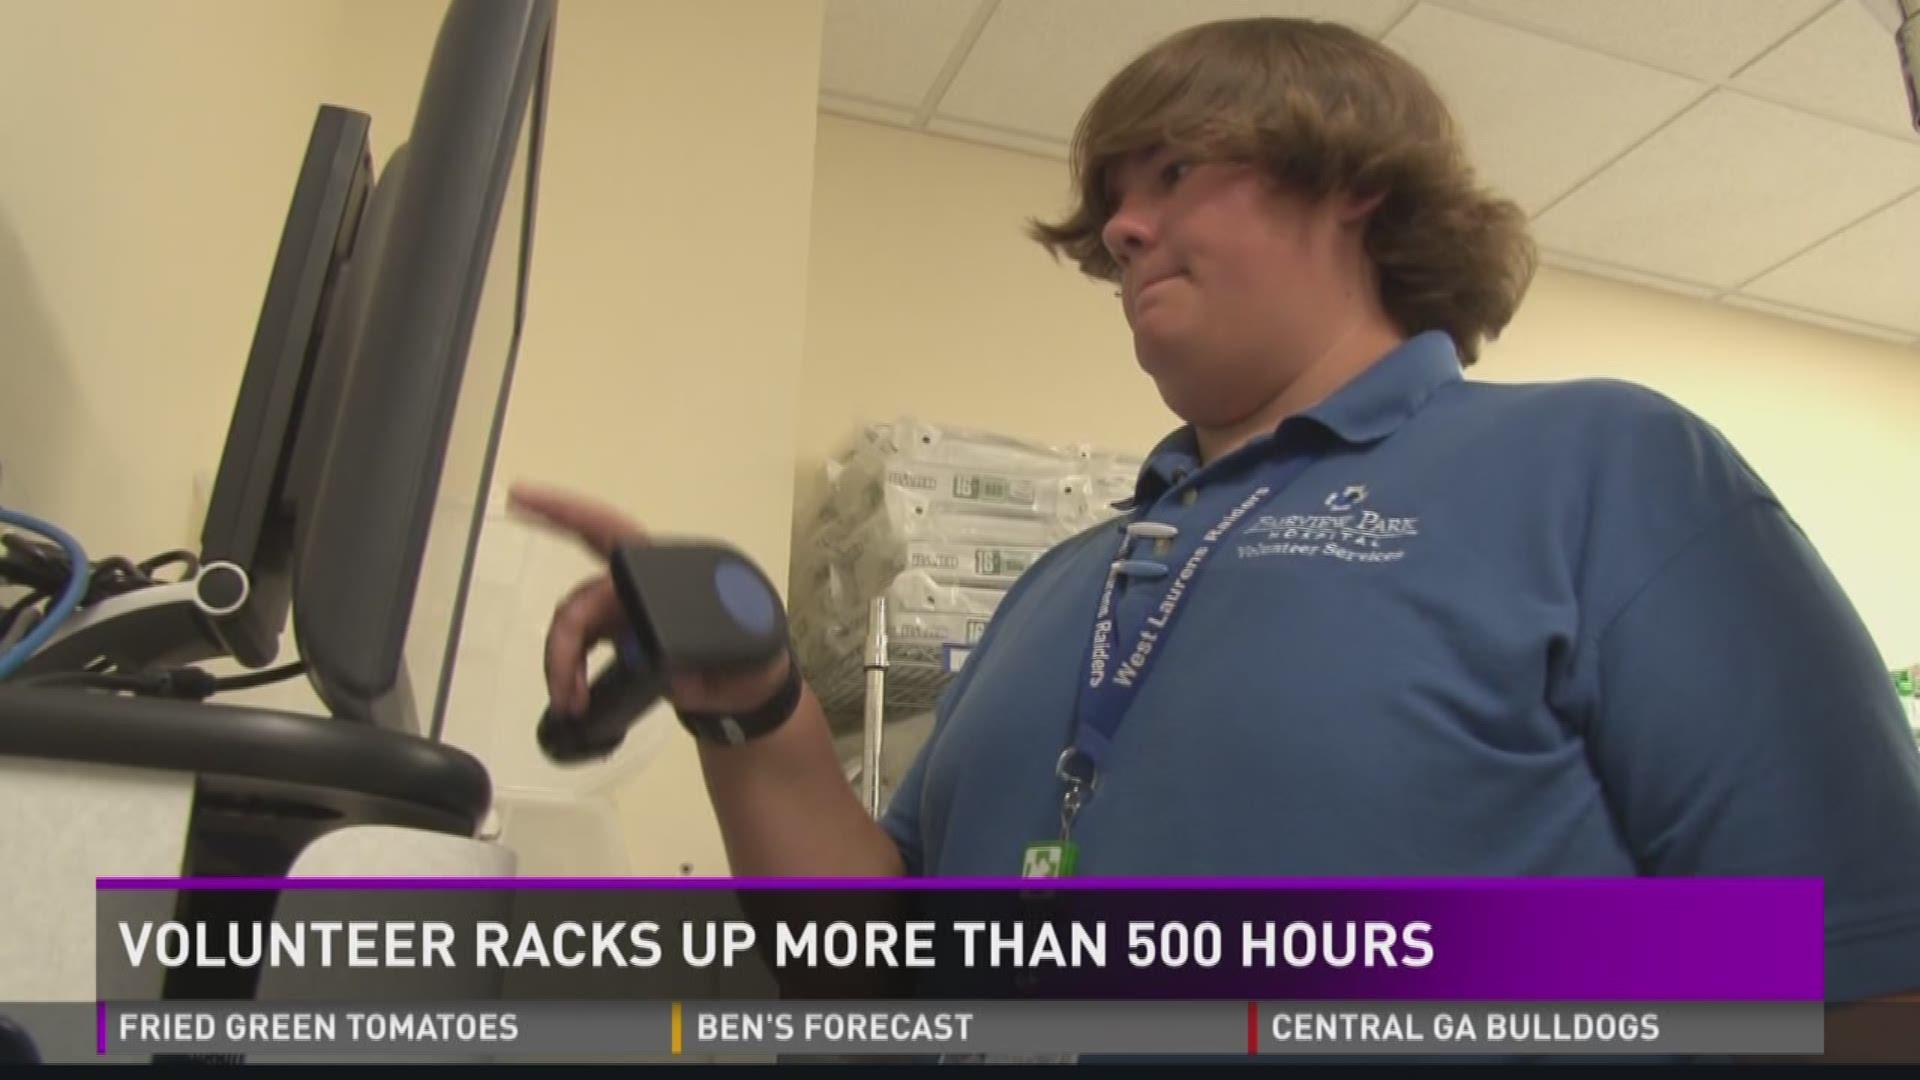 Hospital volunteer racks up more than 500 hours